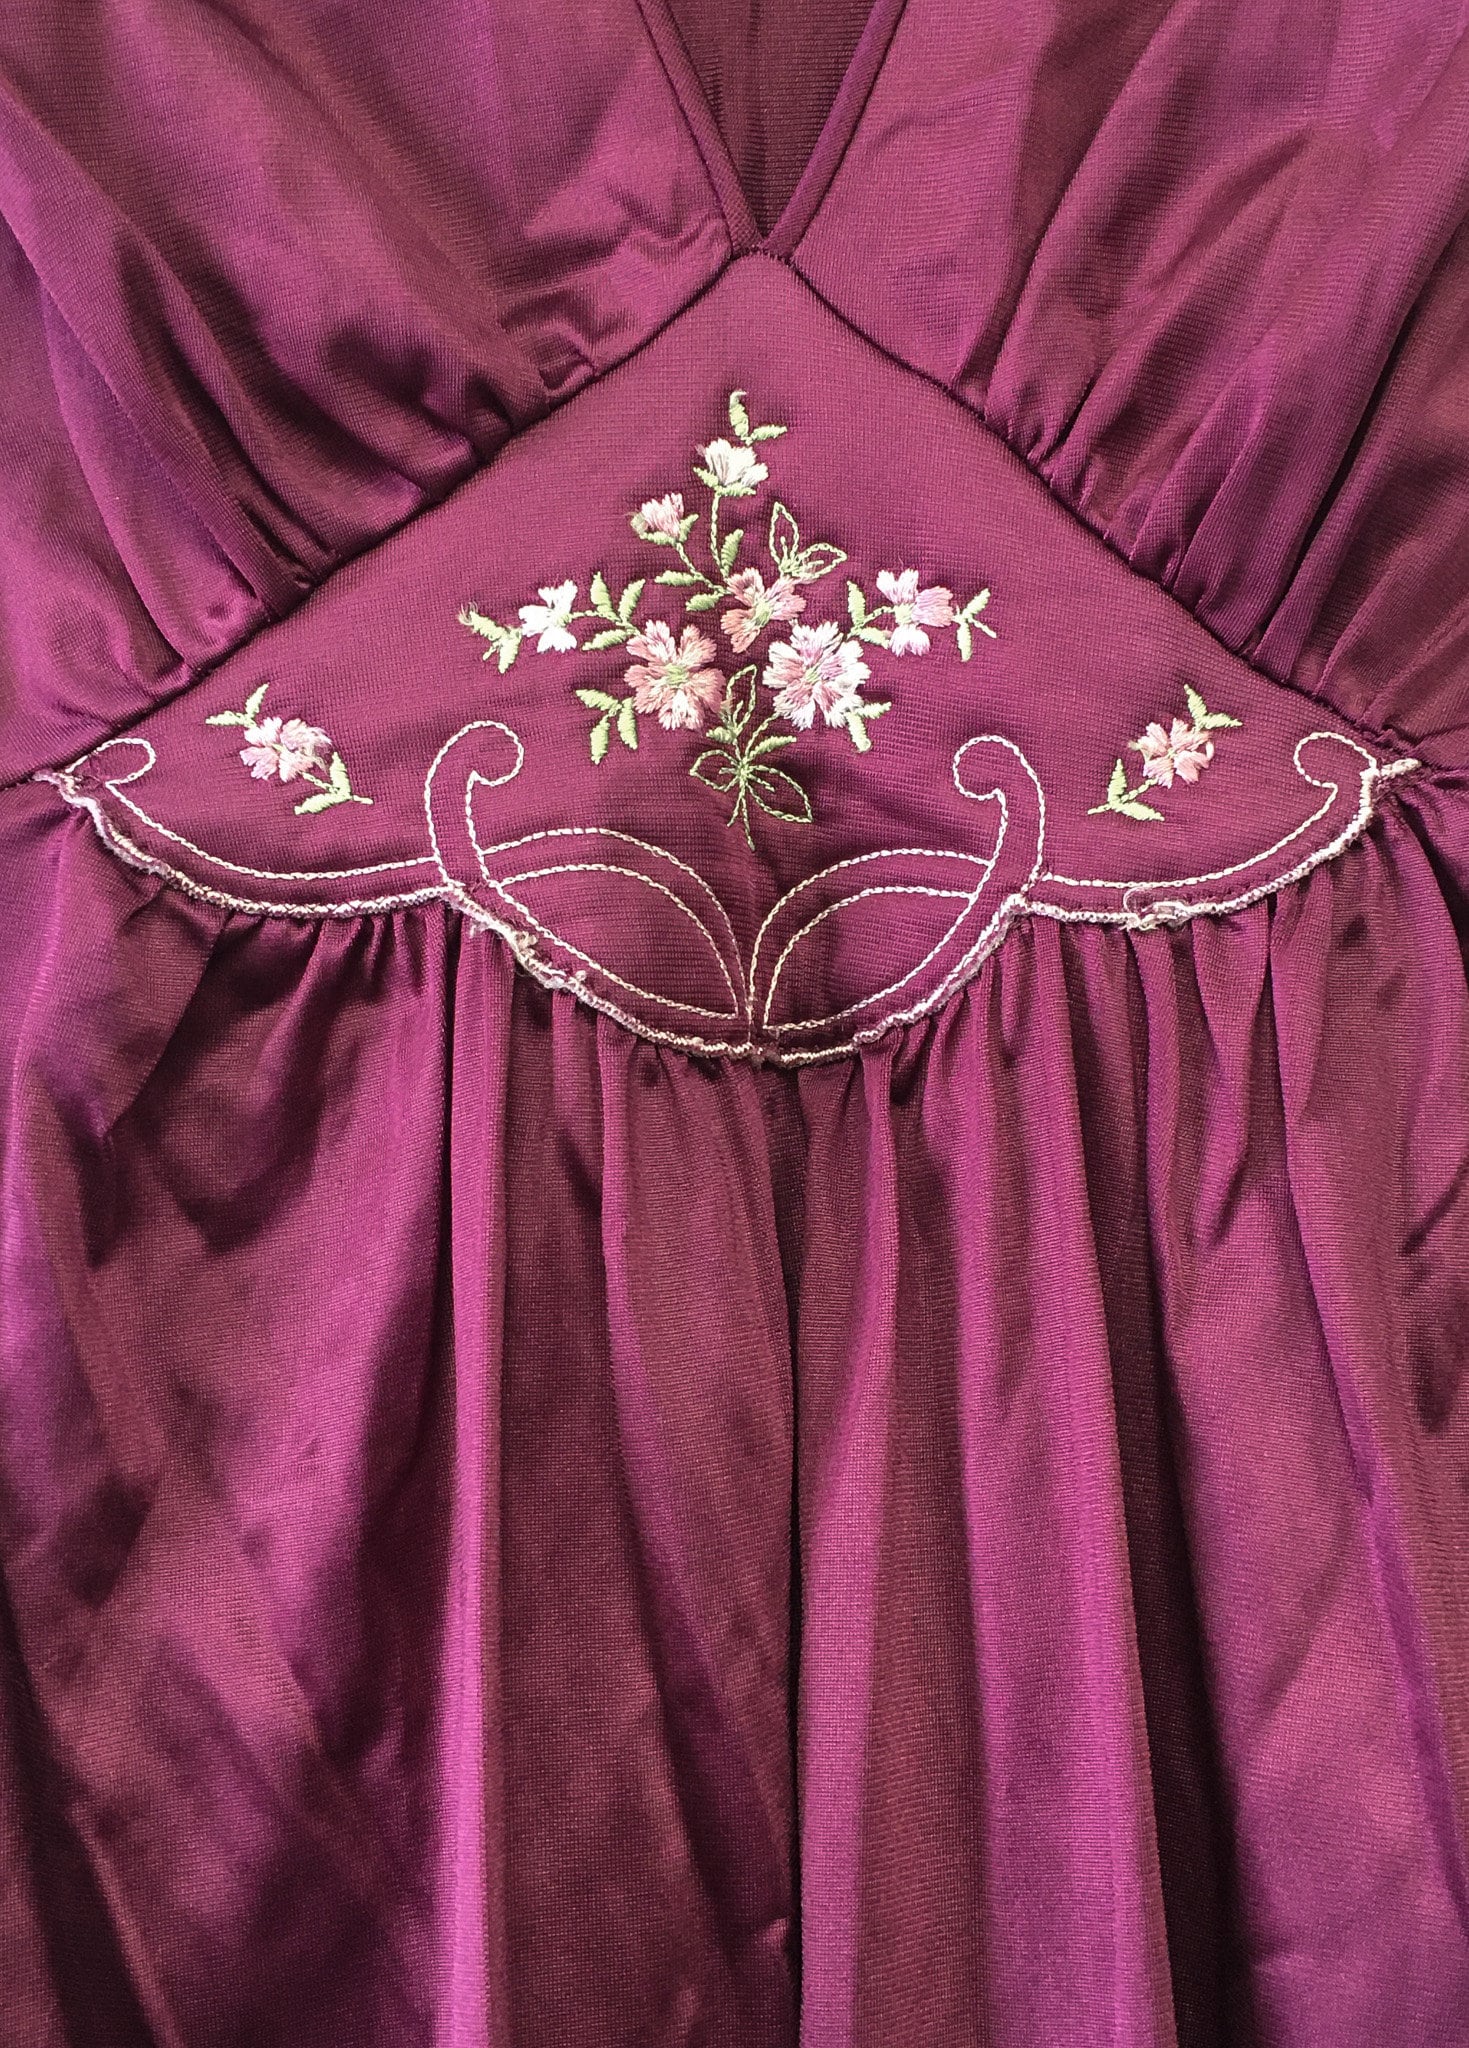 Vintage Lorraine Purple Slip Dress with Floral Embroidery and Adjustable Waist Tie, Sz. M, Vintage Peignoir Dress